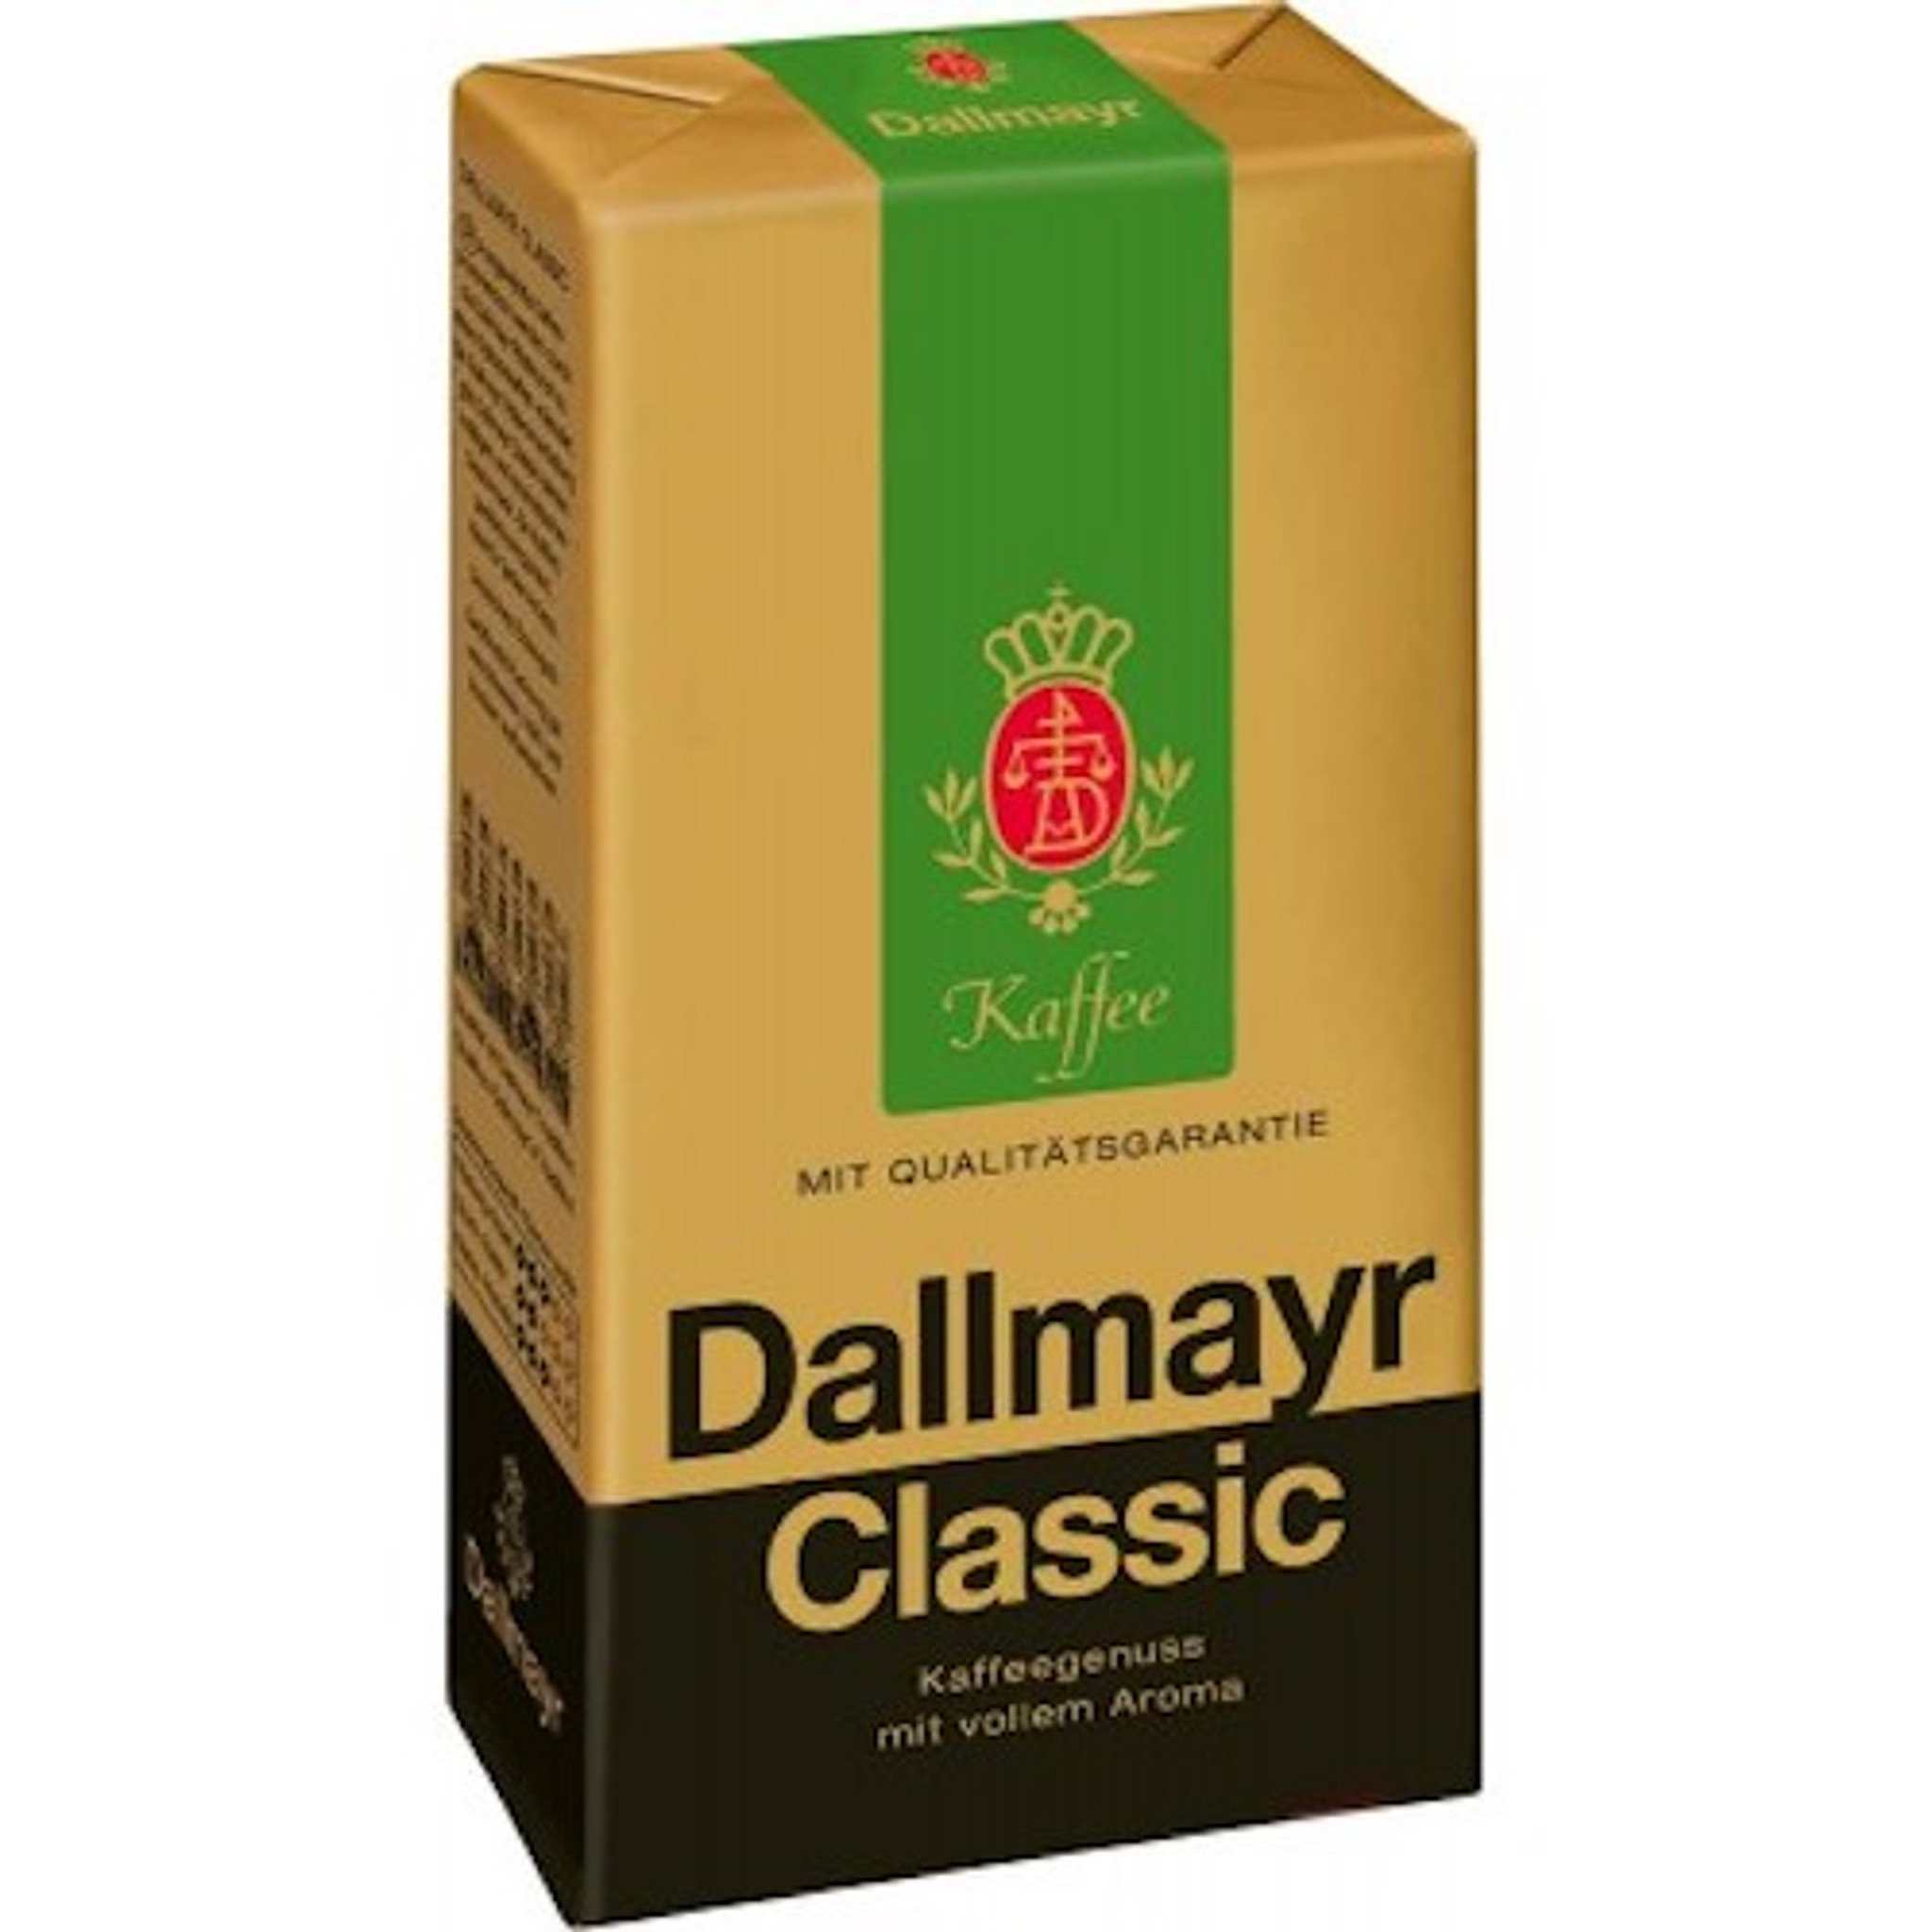 Dallmayr Classic Ground Coffee - 8.8 oz. - The Taste of Germany